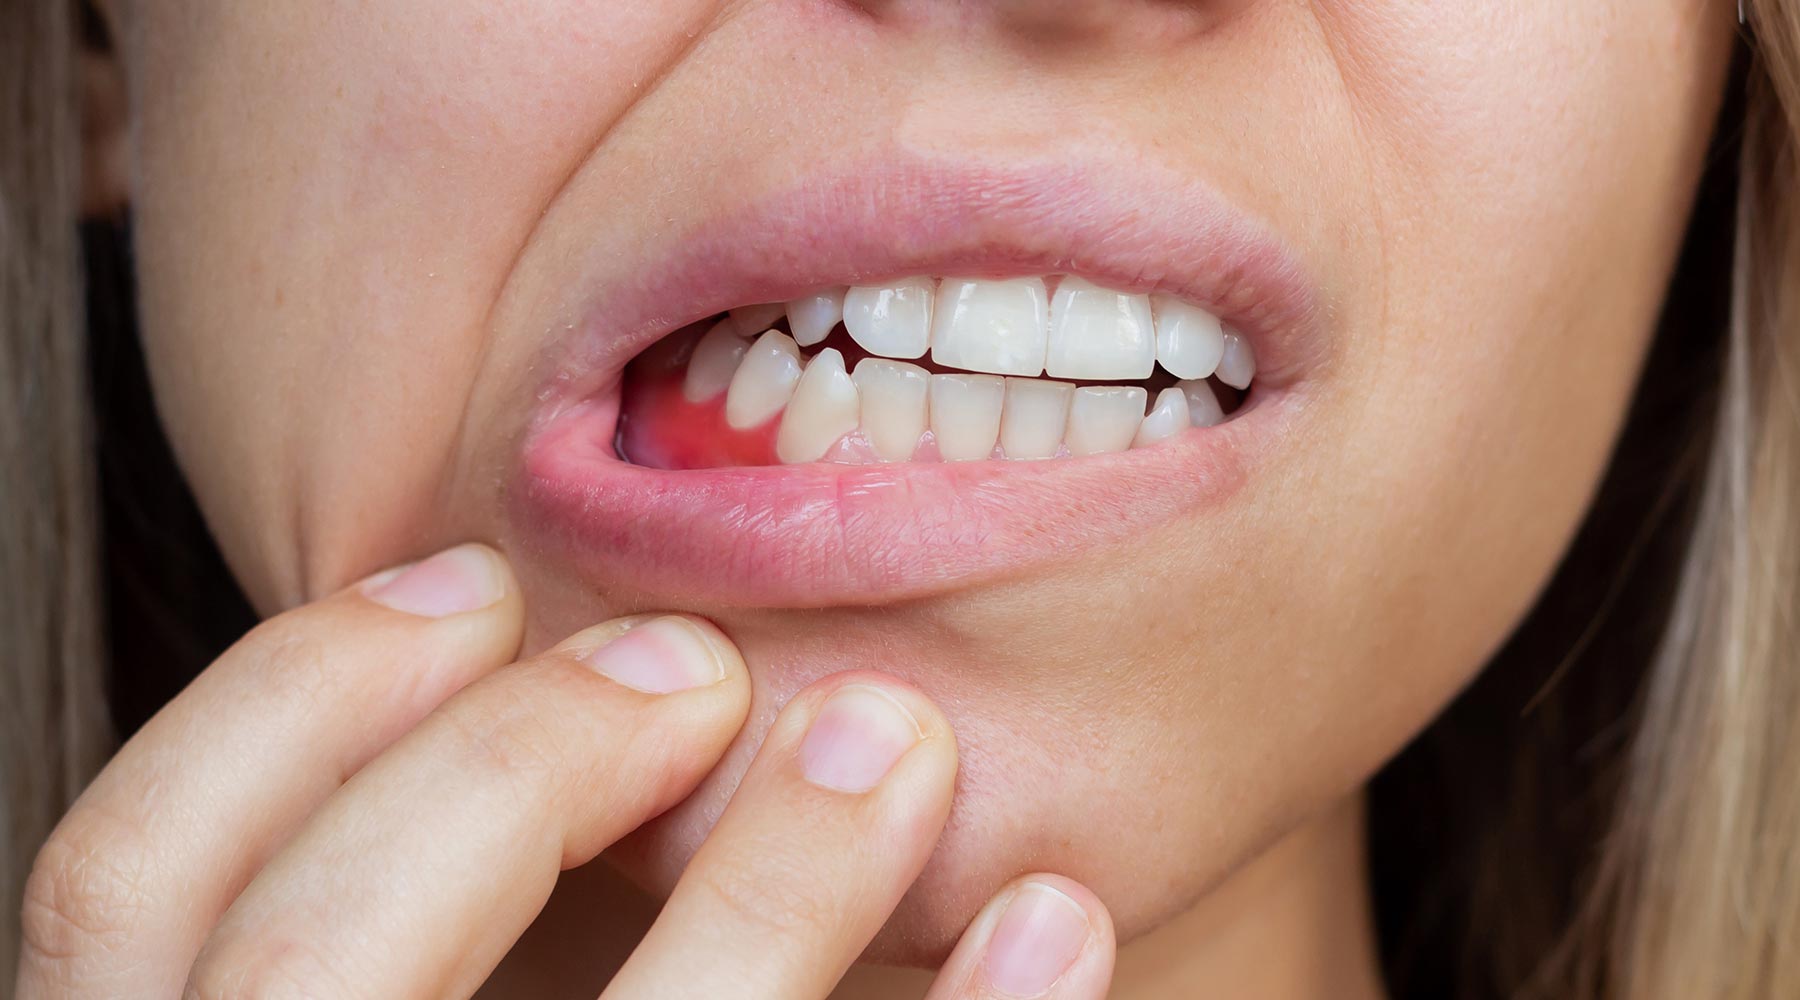 Top myths surrounding gum disease